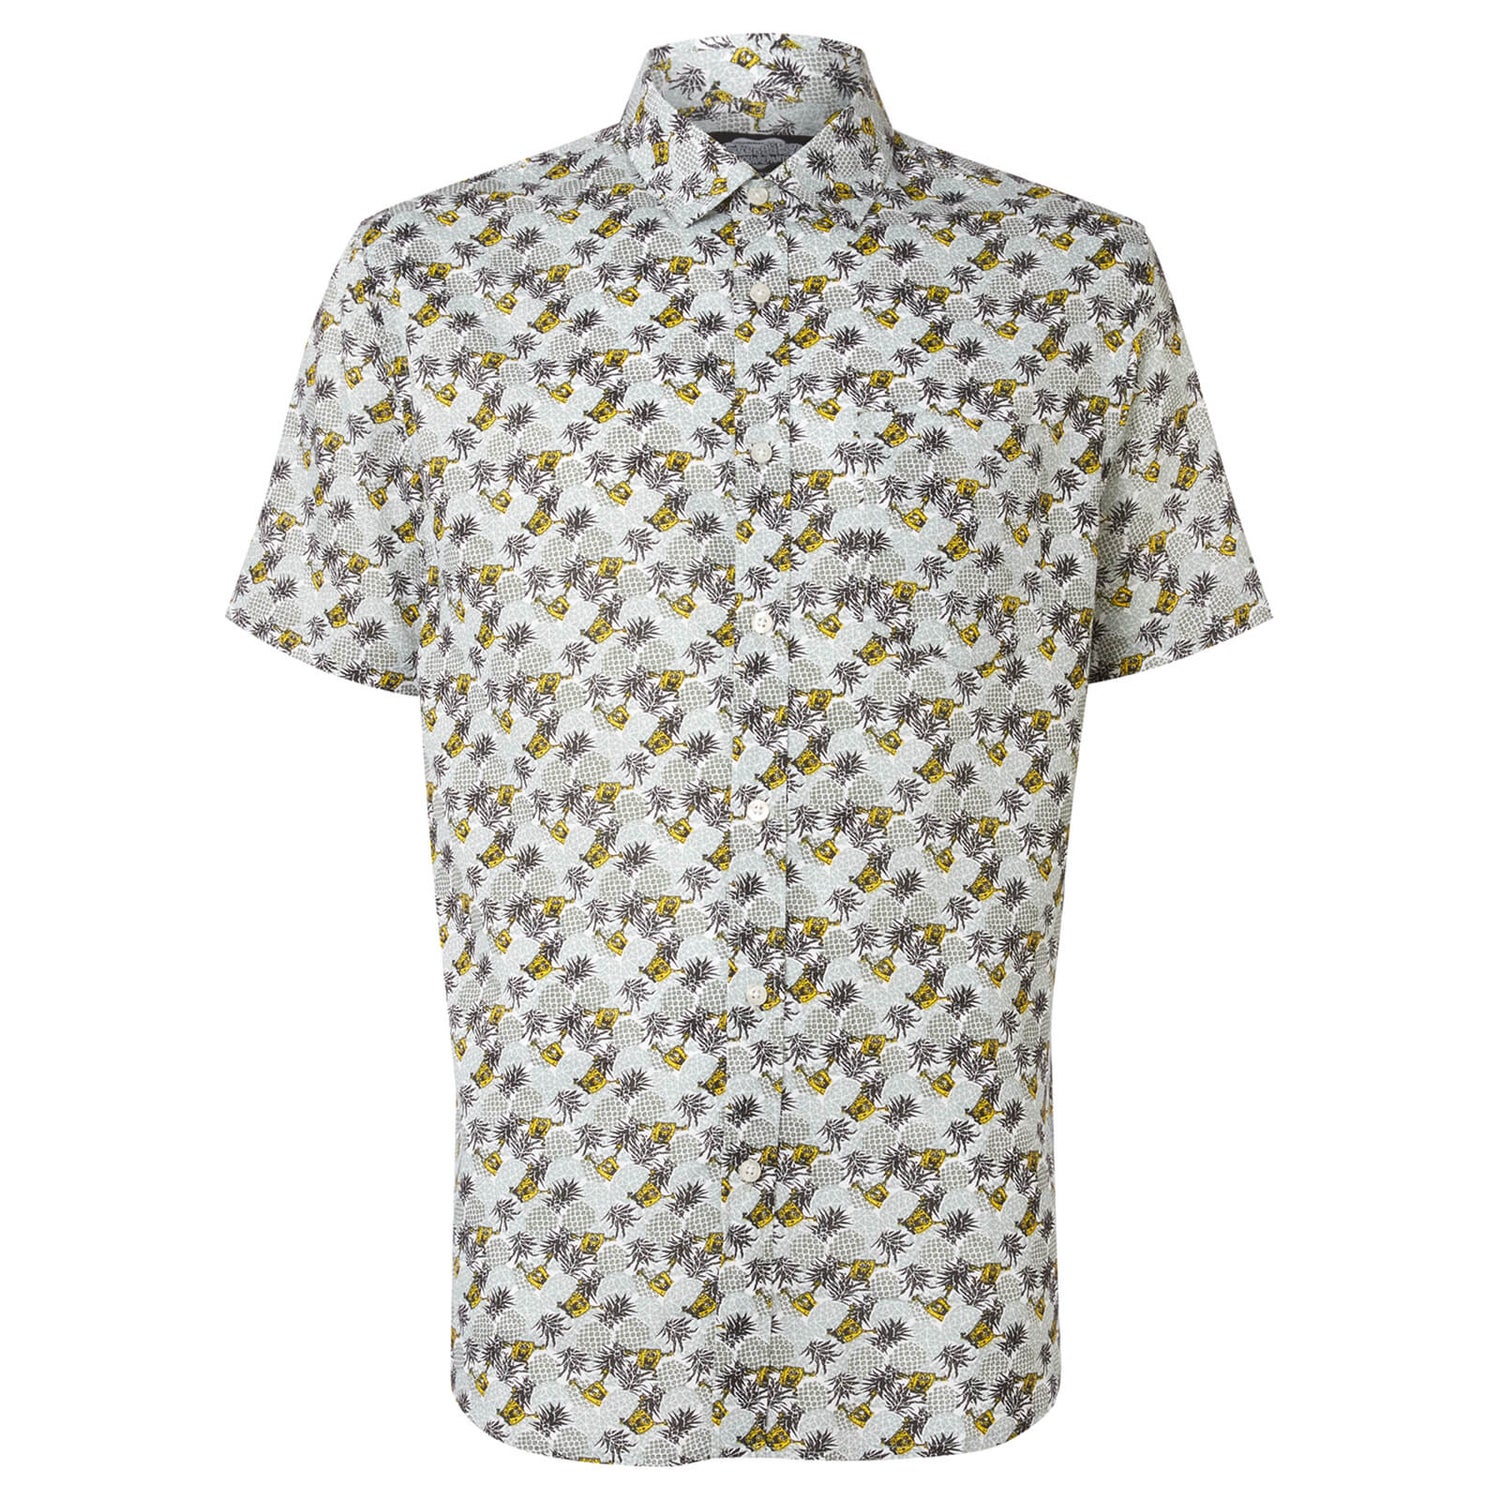 Limited Edition Spongebob Pineapple Printed Shirt - Zavvi Exclusive